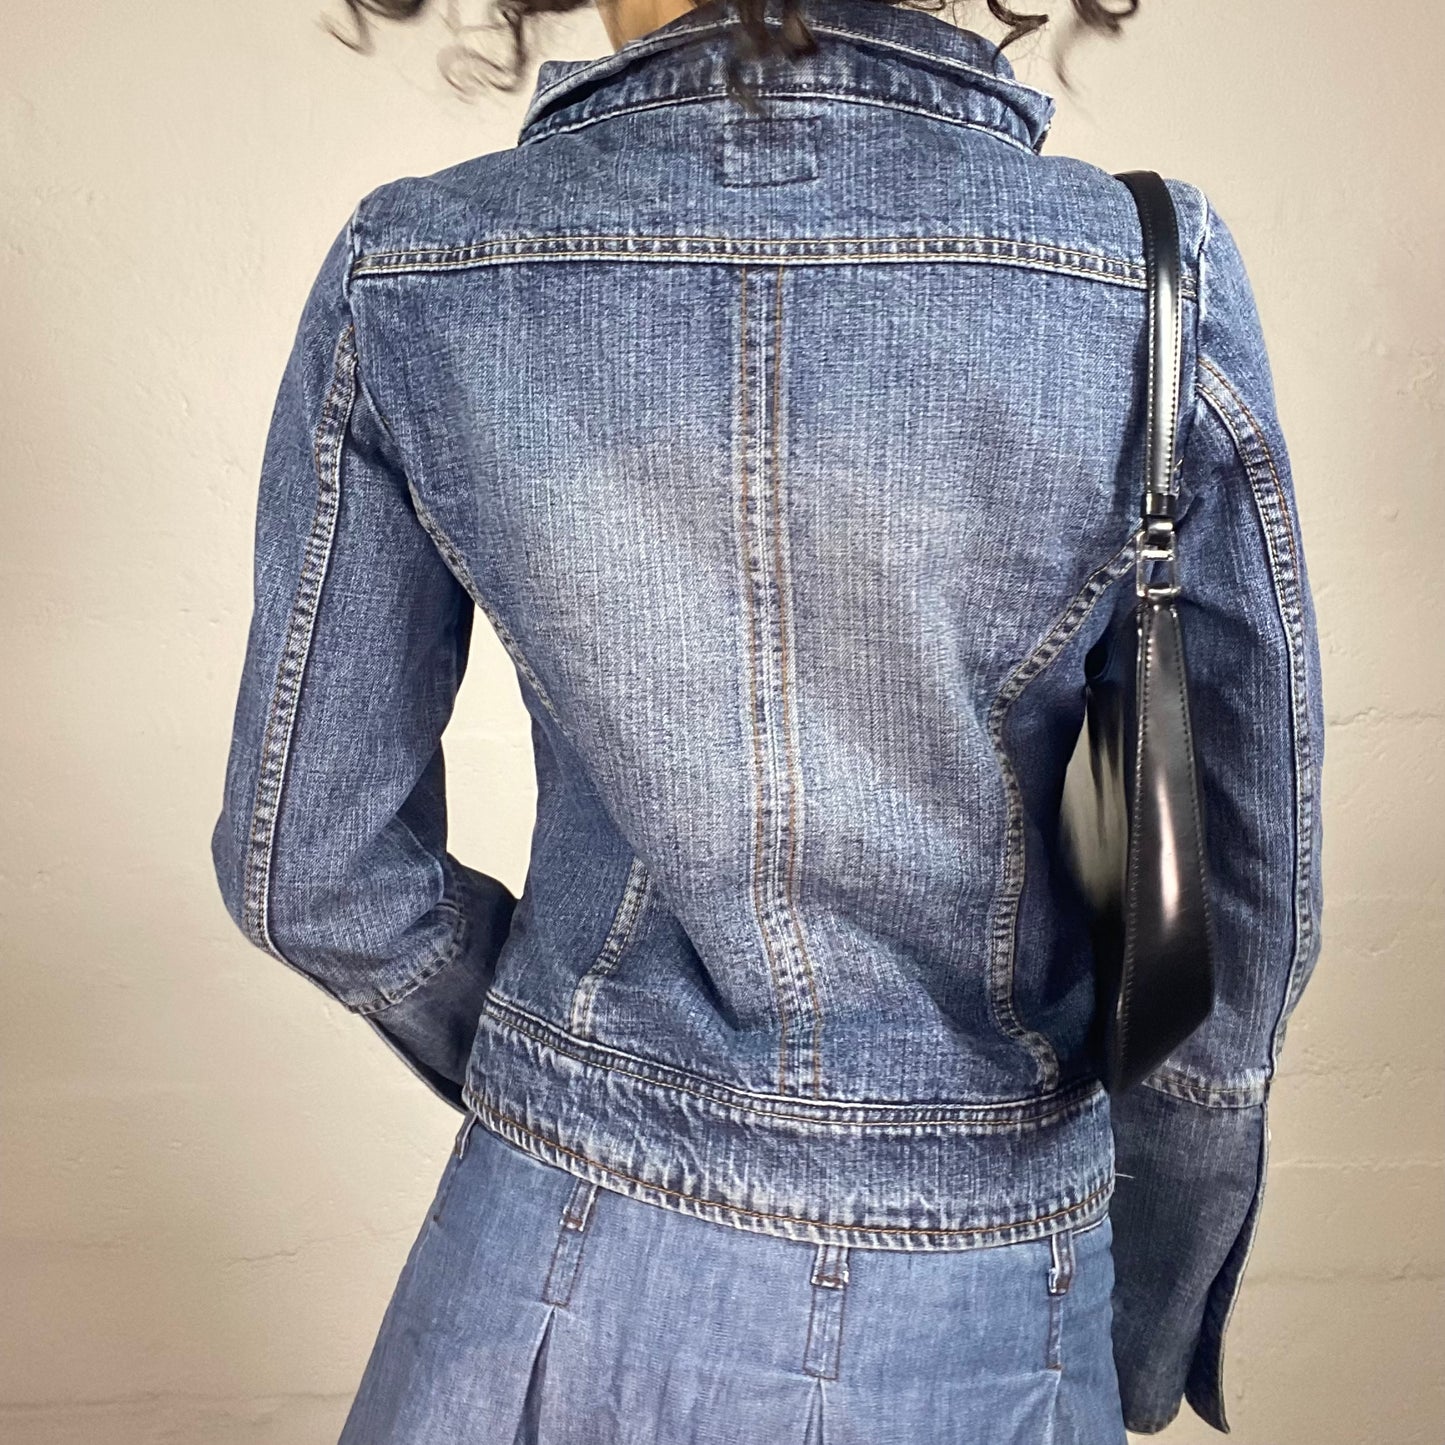 Vintage 2000's Biker Style Side Zipper Blue Denim Jackets with Pockets (M)